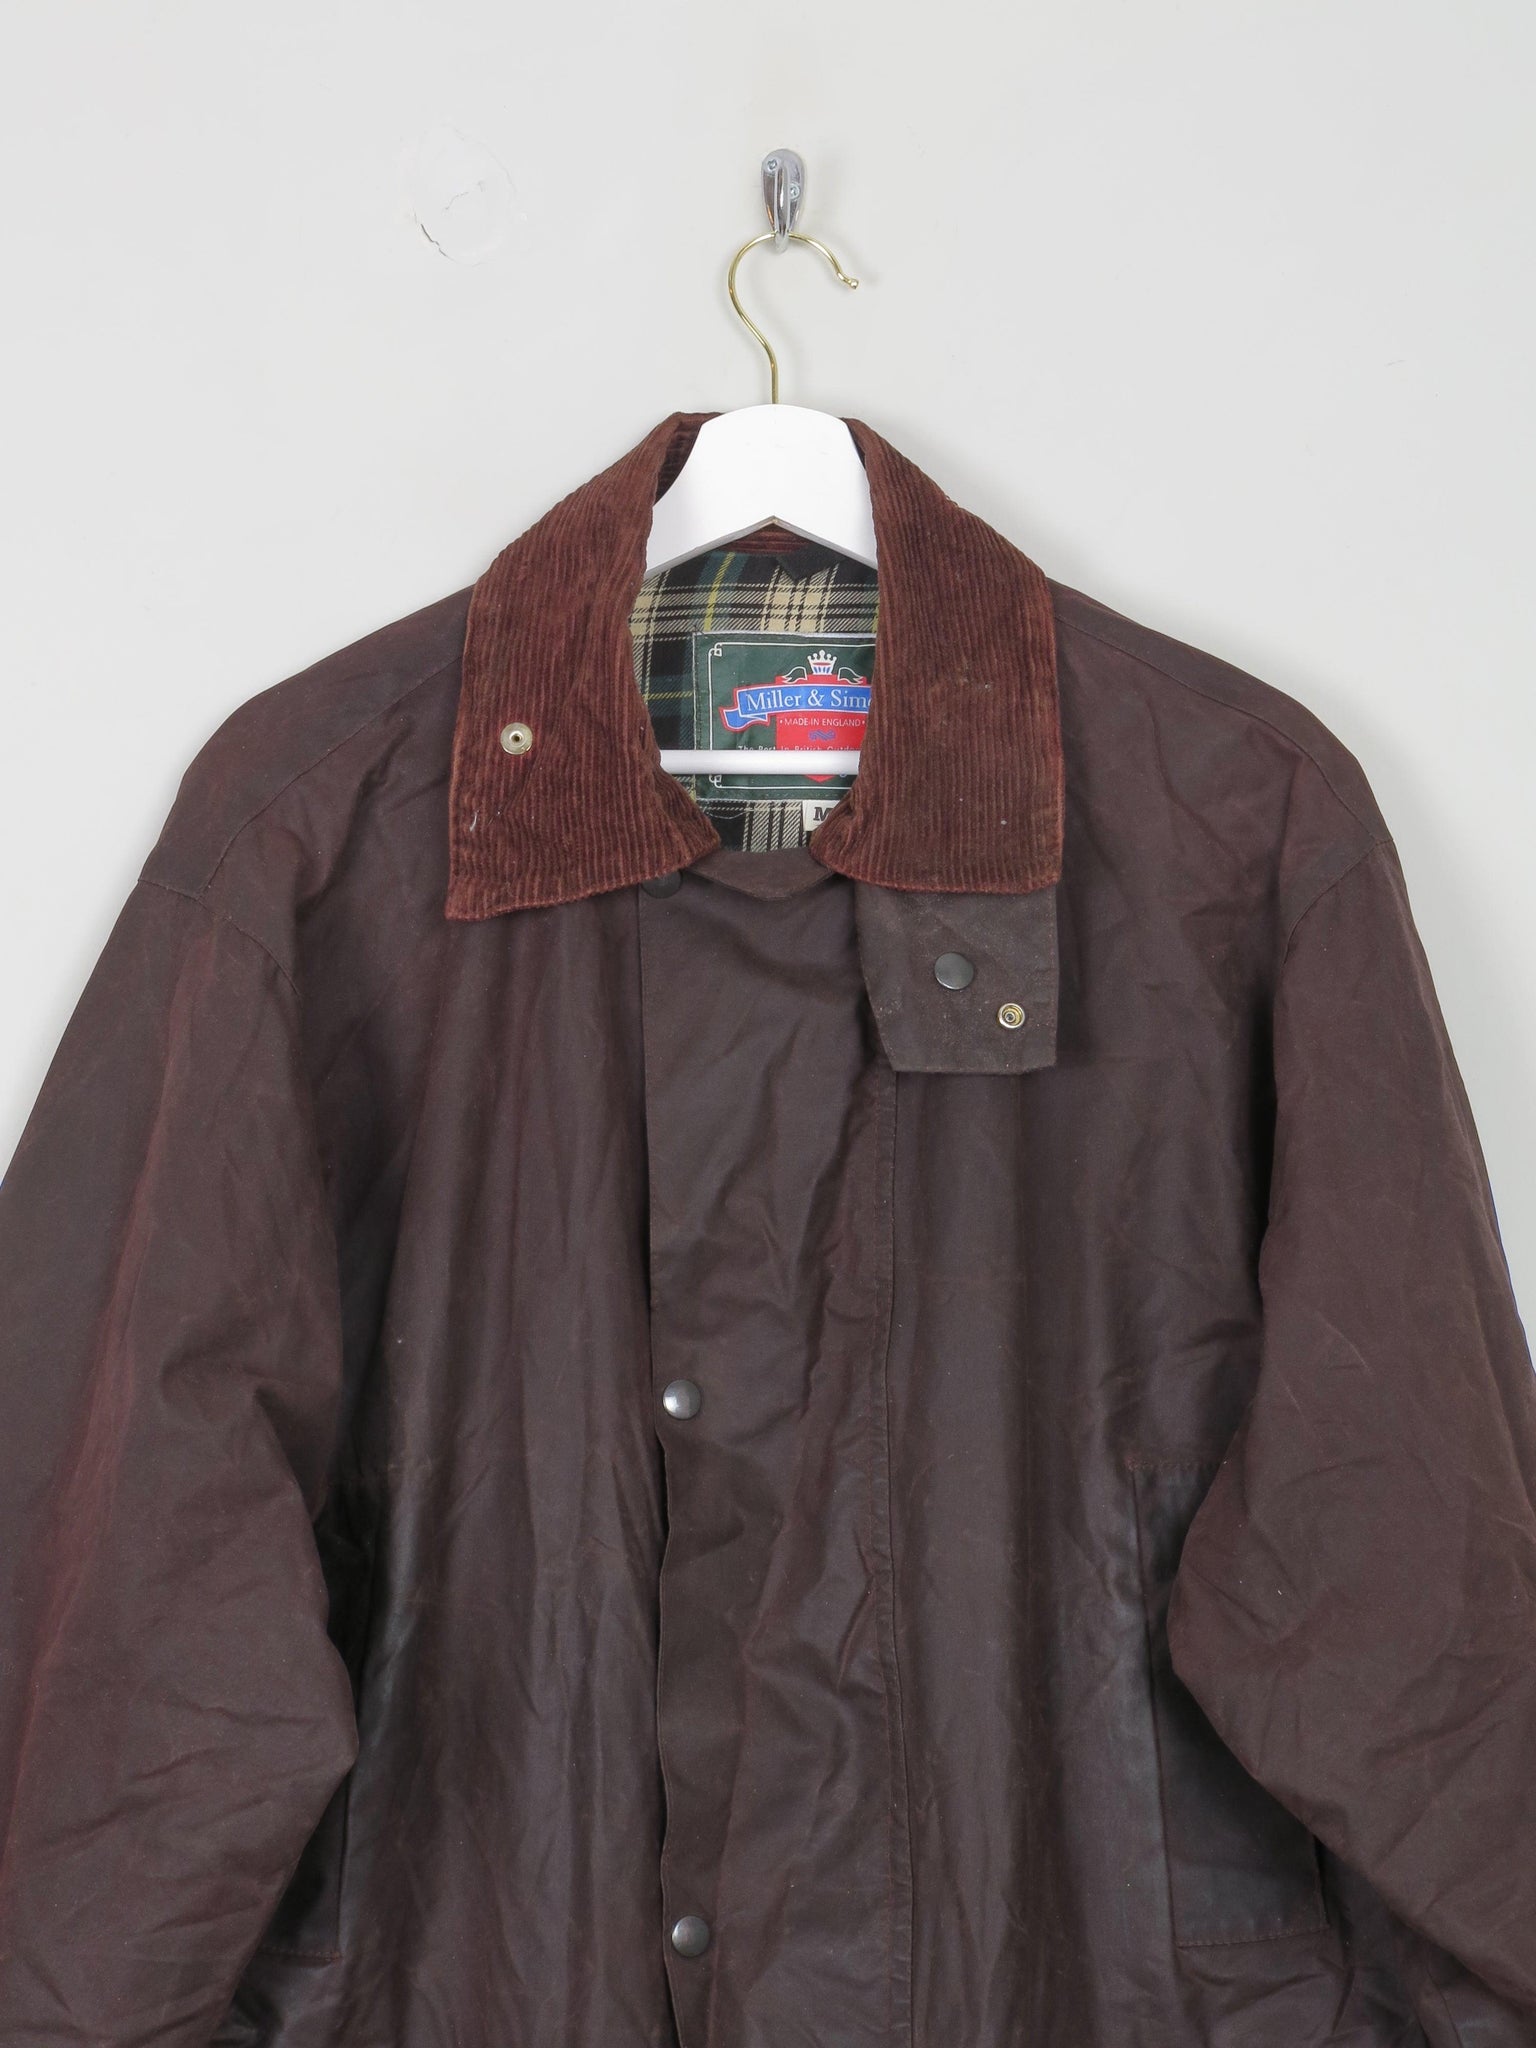 Men's Brown Vintage Wax Jacket M - The Harlequin